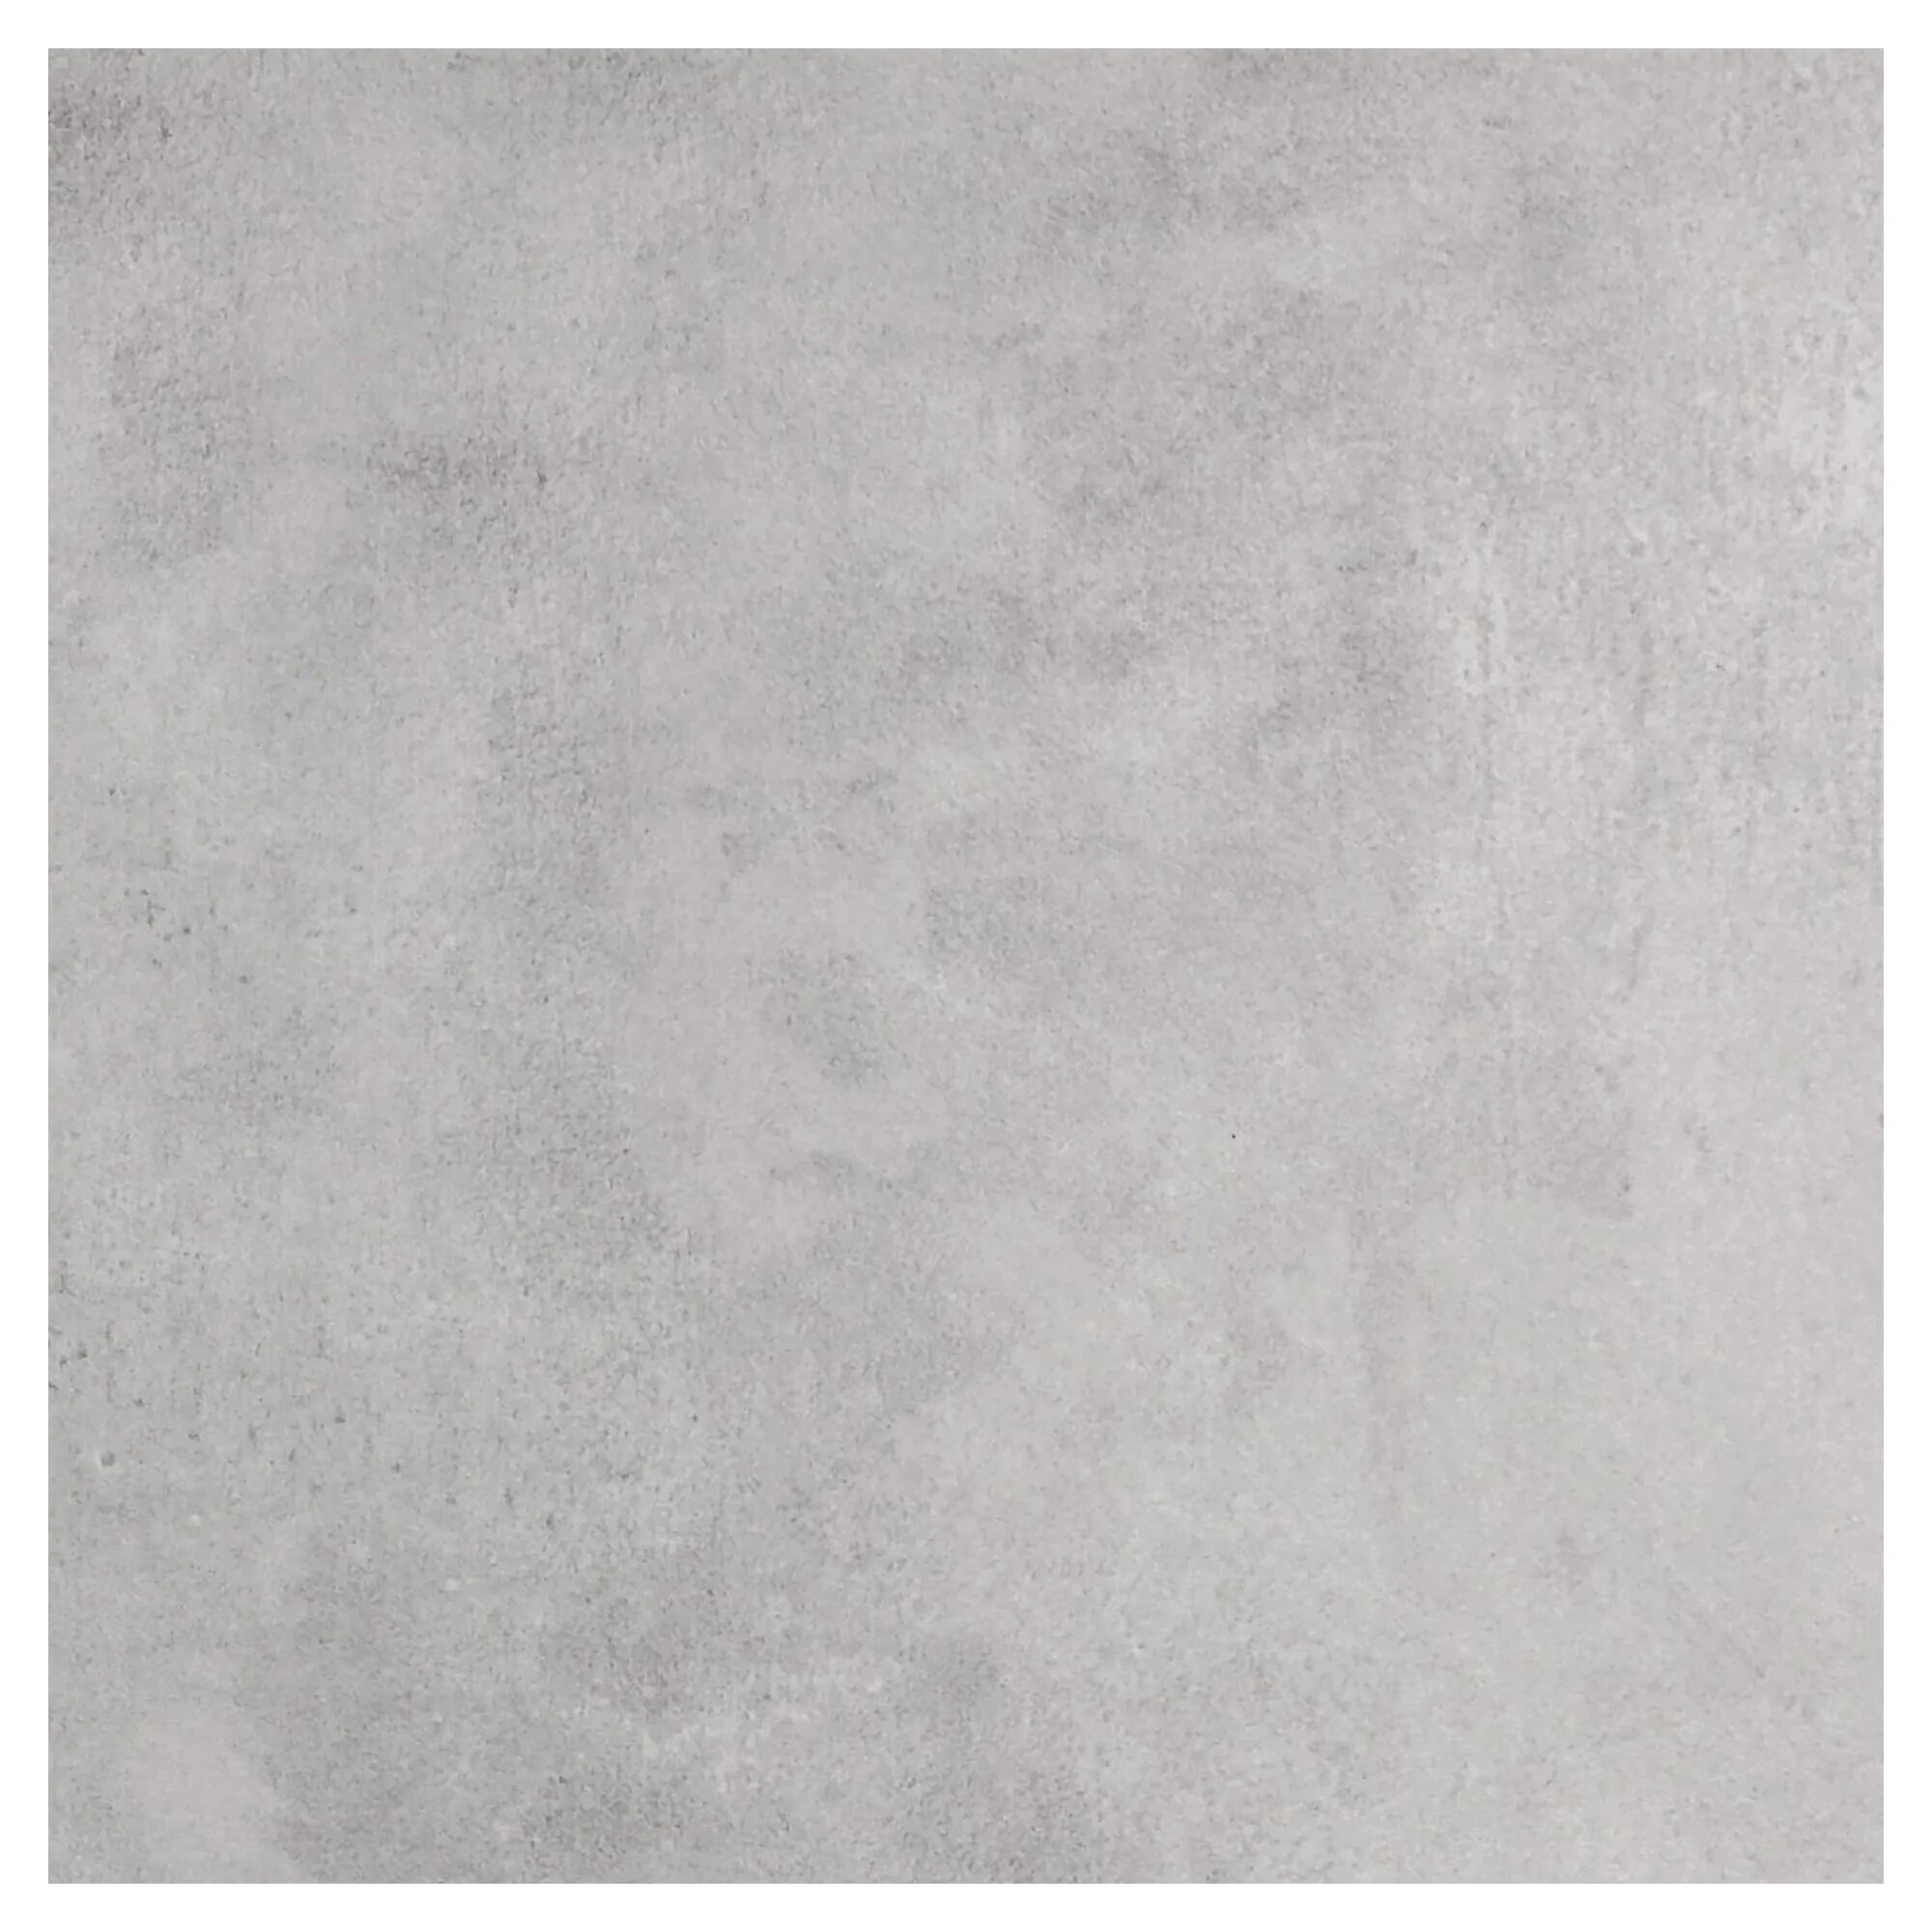 tecnomat pavimento interno industrial grigio 31x31x0,7 cm pei5 r9 gres porcellanato